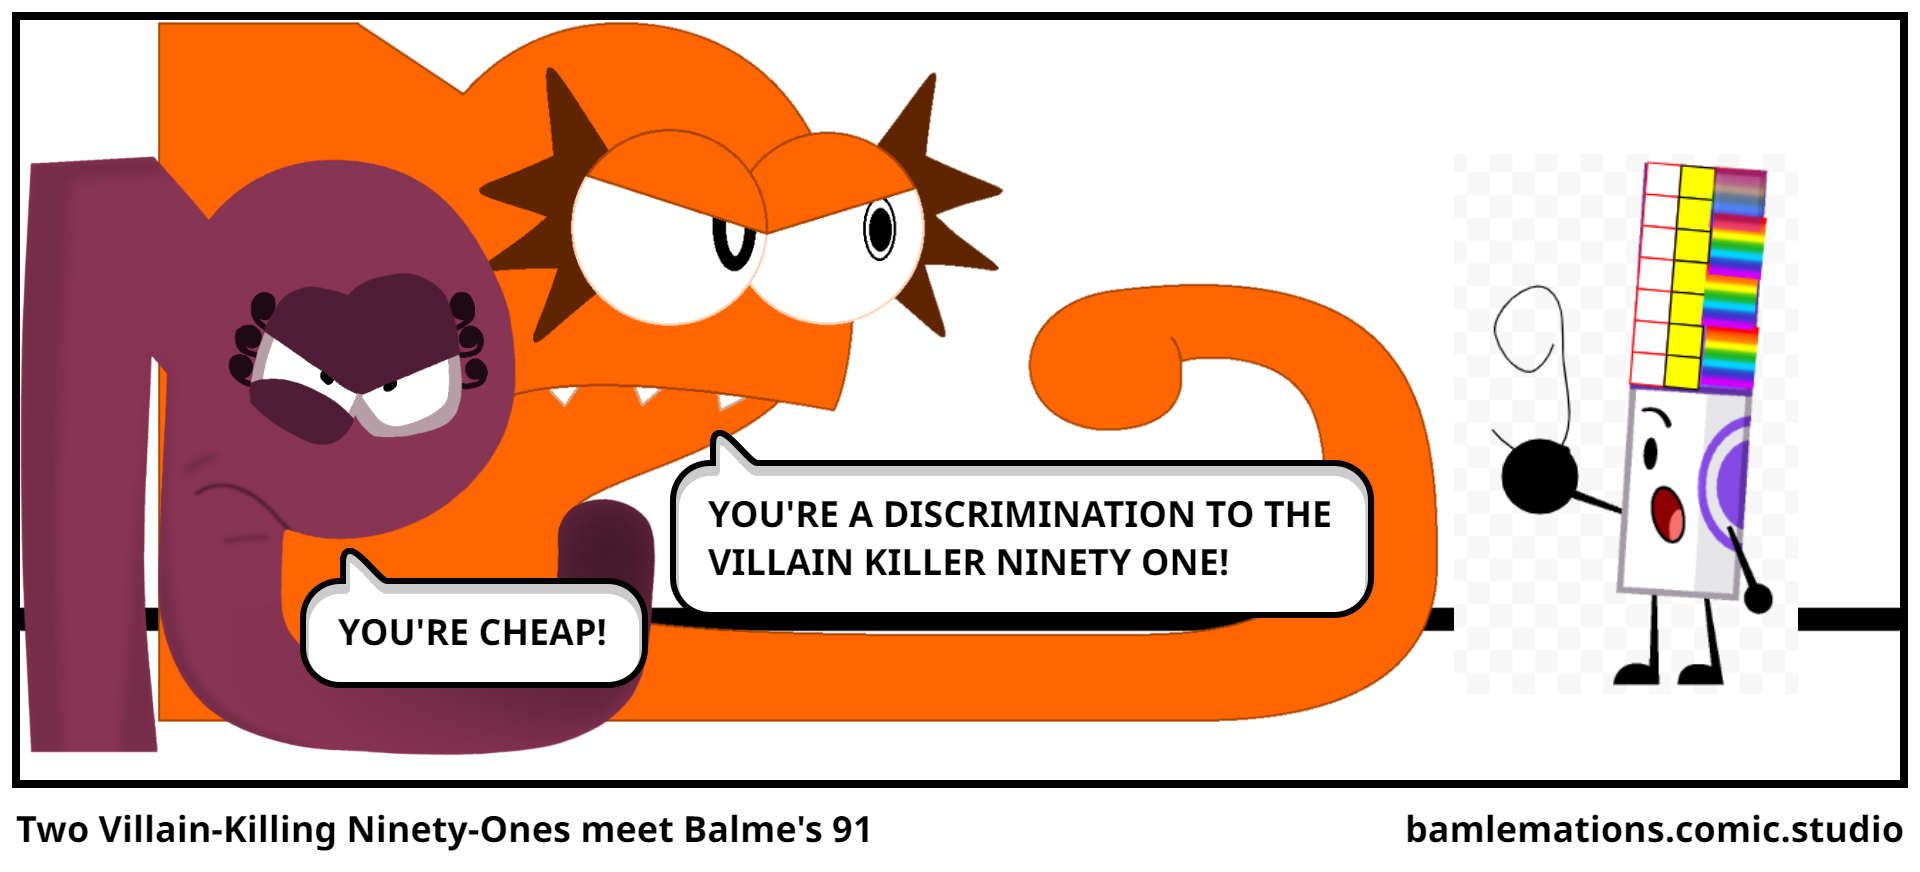 Two Villain-Killing Ninety-Ones meet Balme's 91